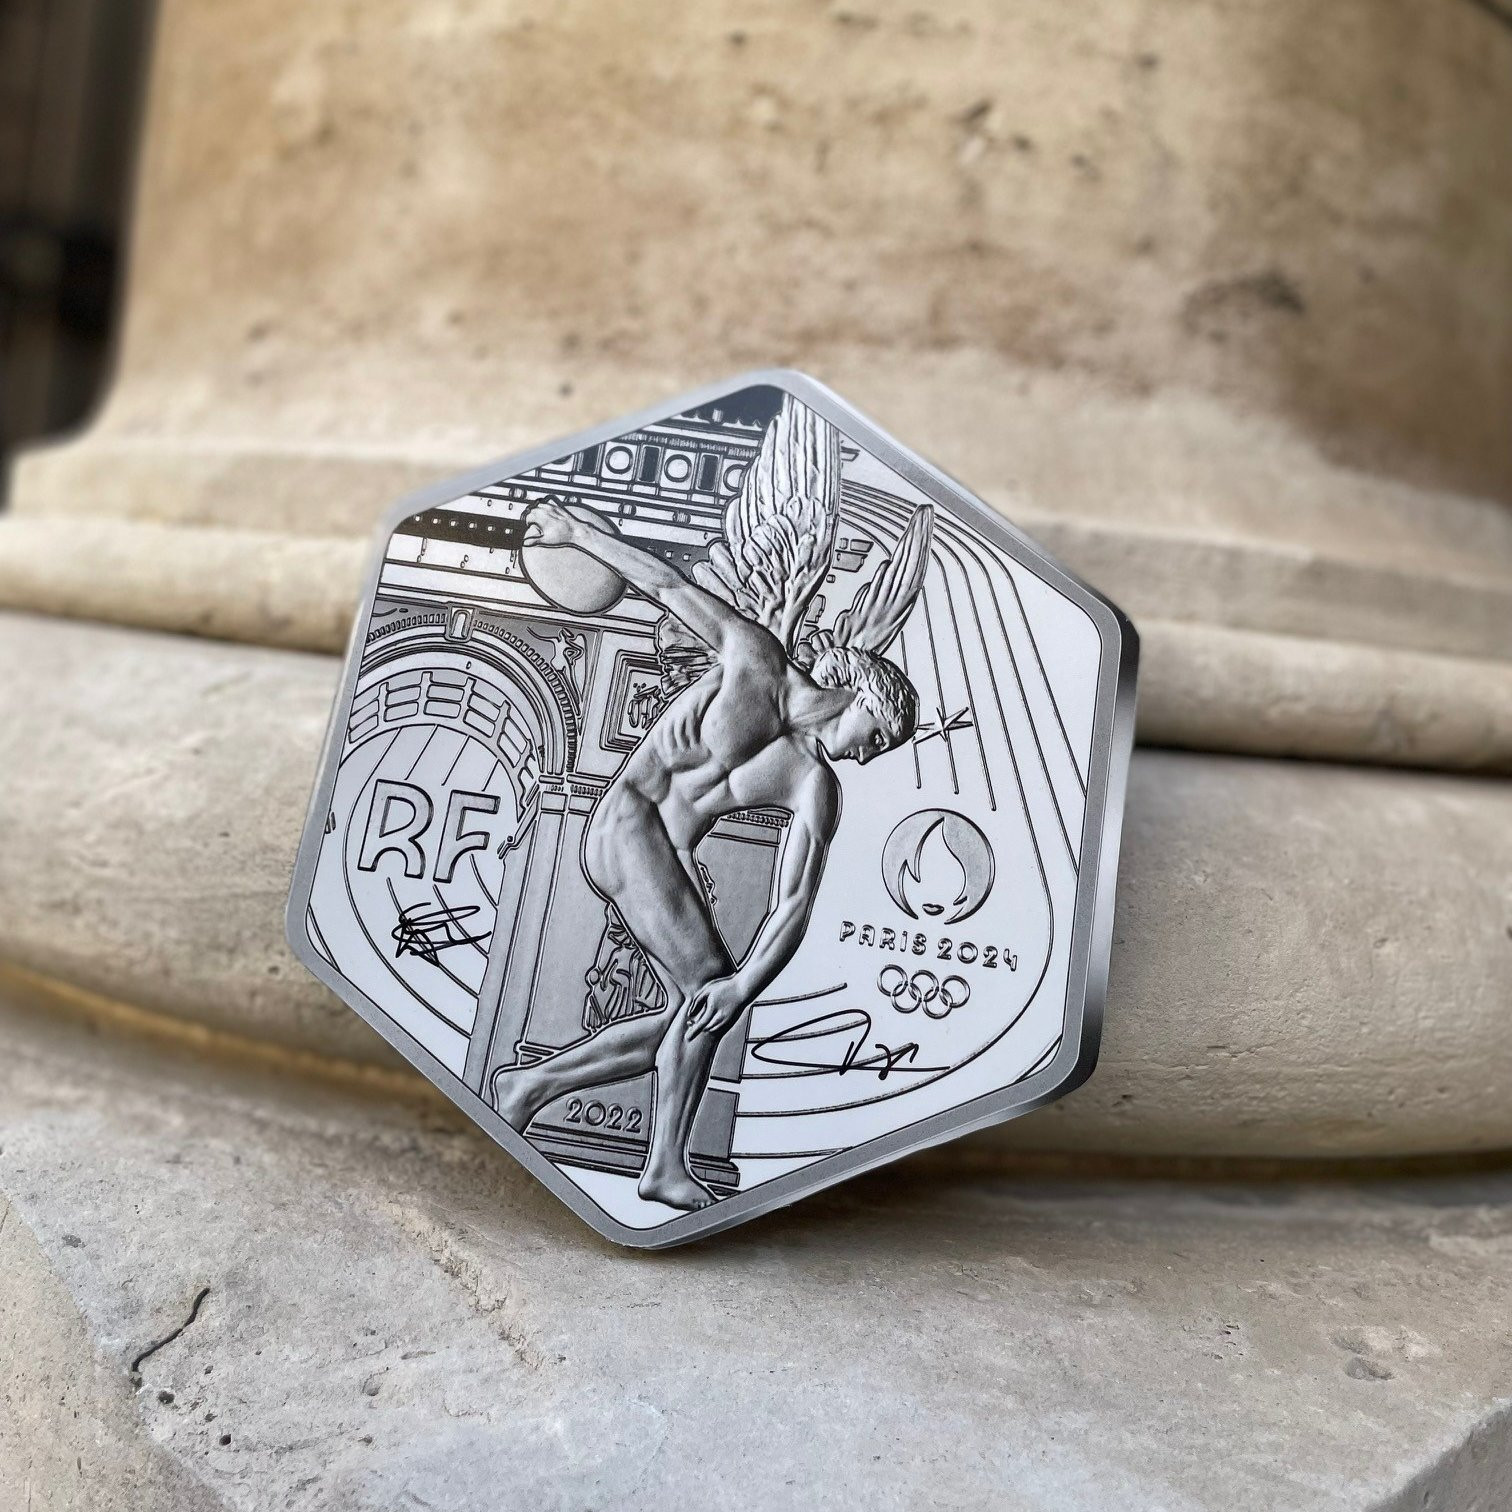 Special hexagonal commemorative coin struck for Paris 2024